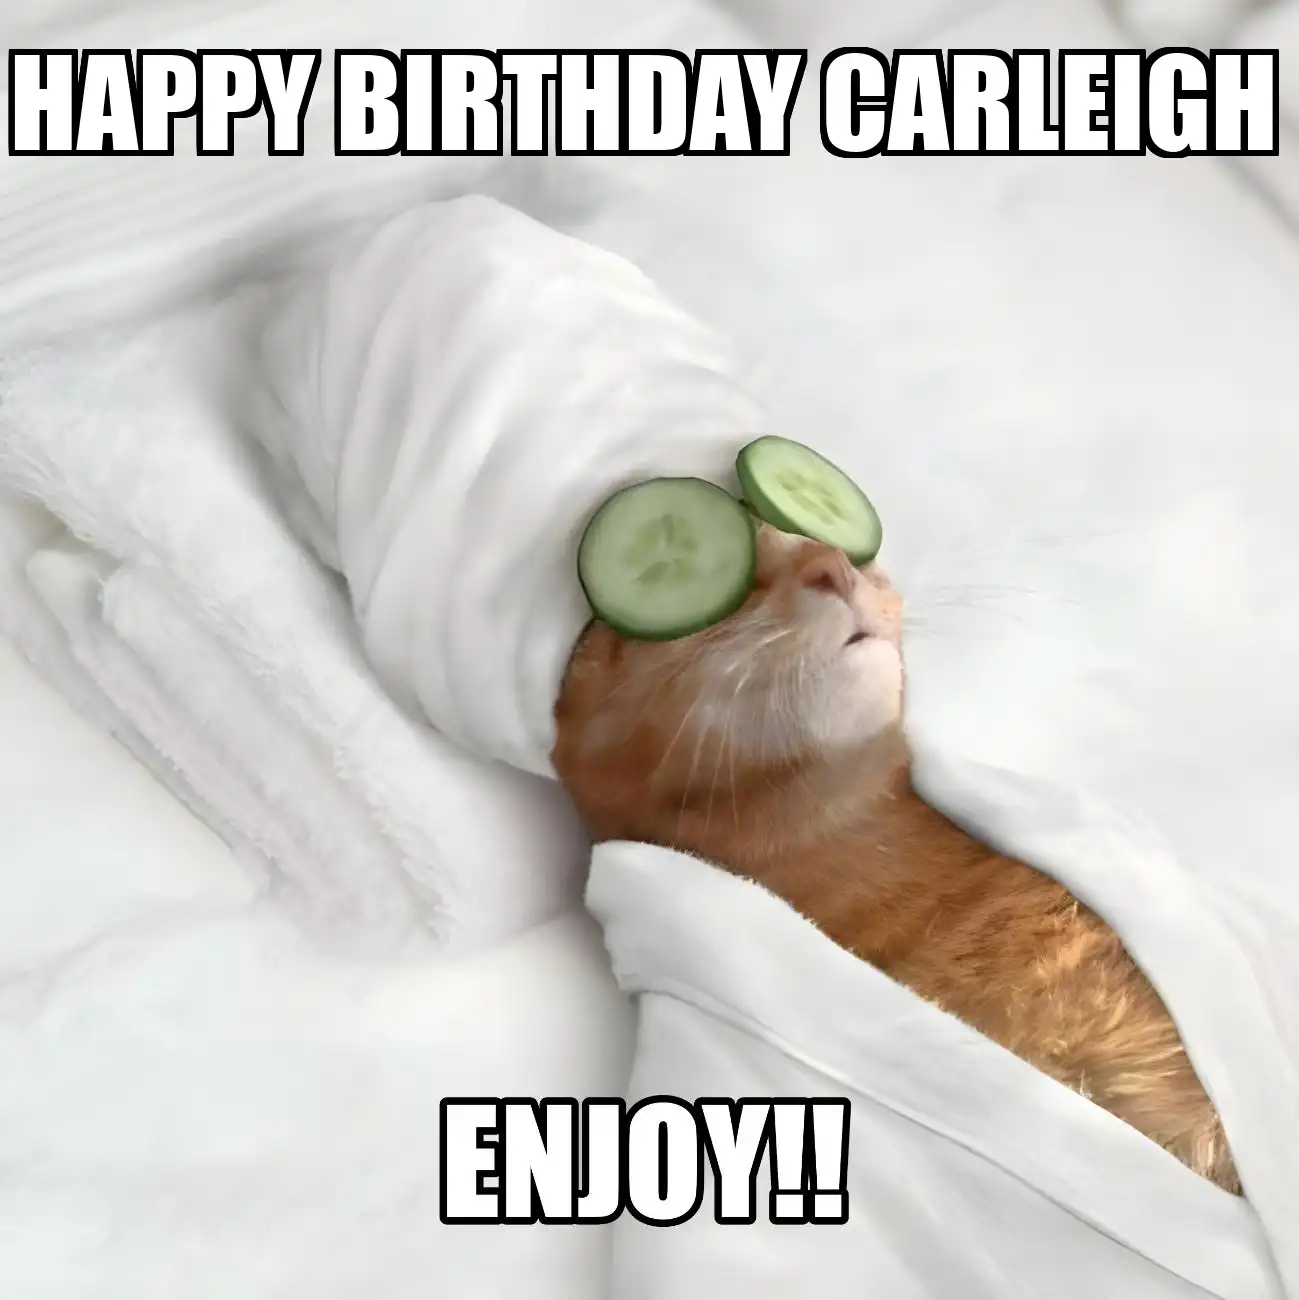 Happy Birthday Carleigh Enjoy Cat Meme